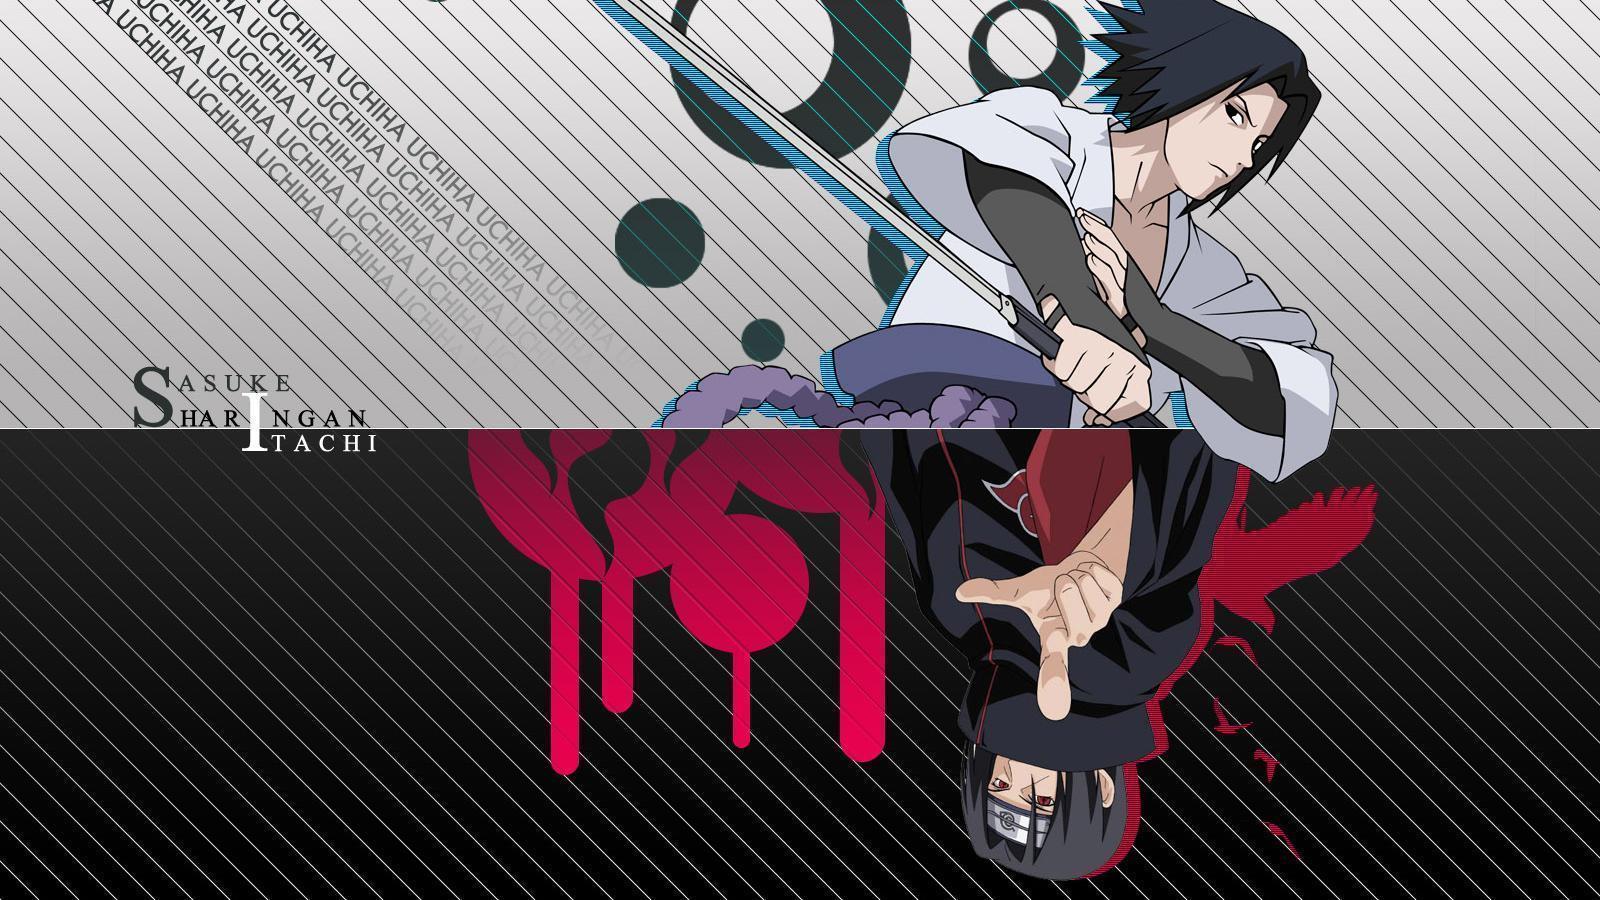 Wallpaper For > Sasuke And Itachi Susanoo Wallpaper